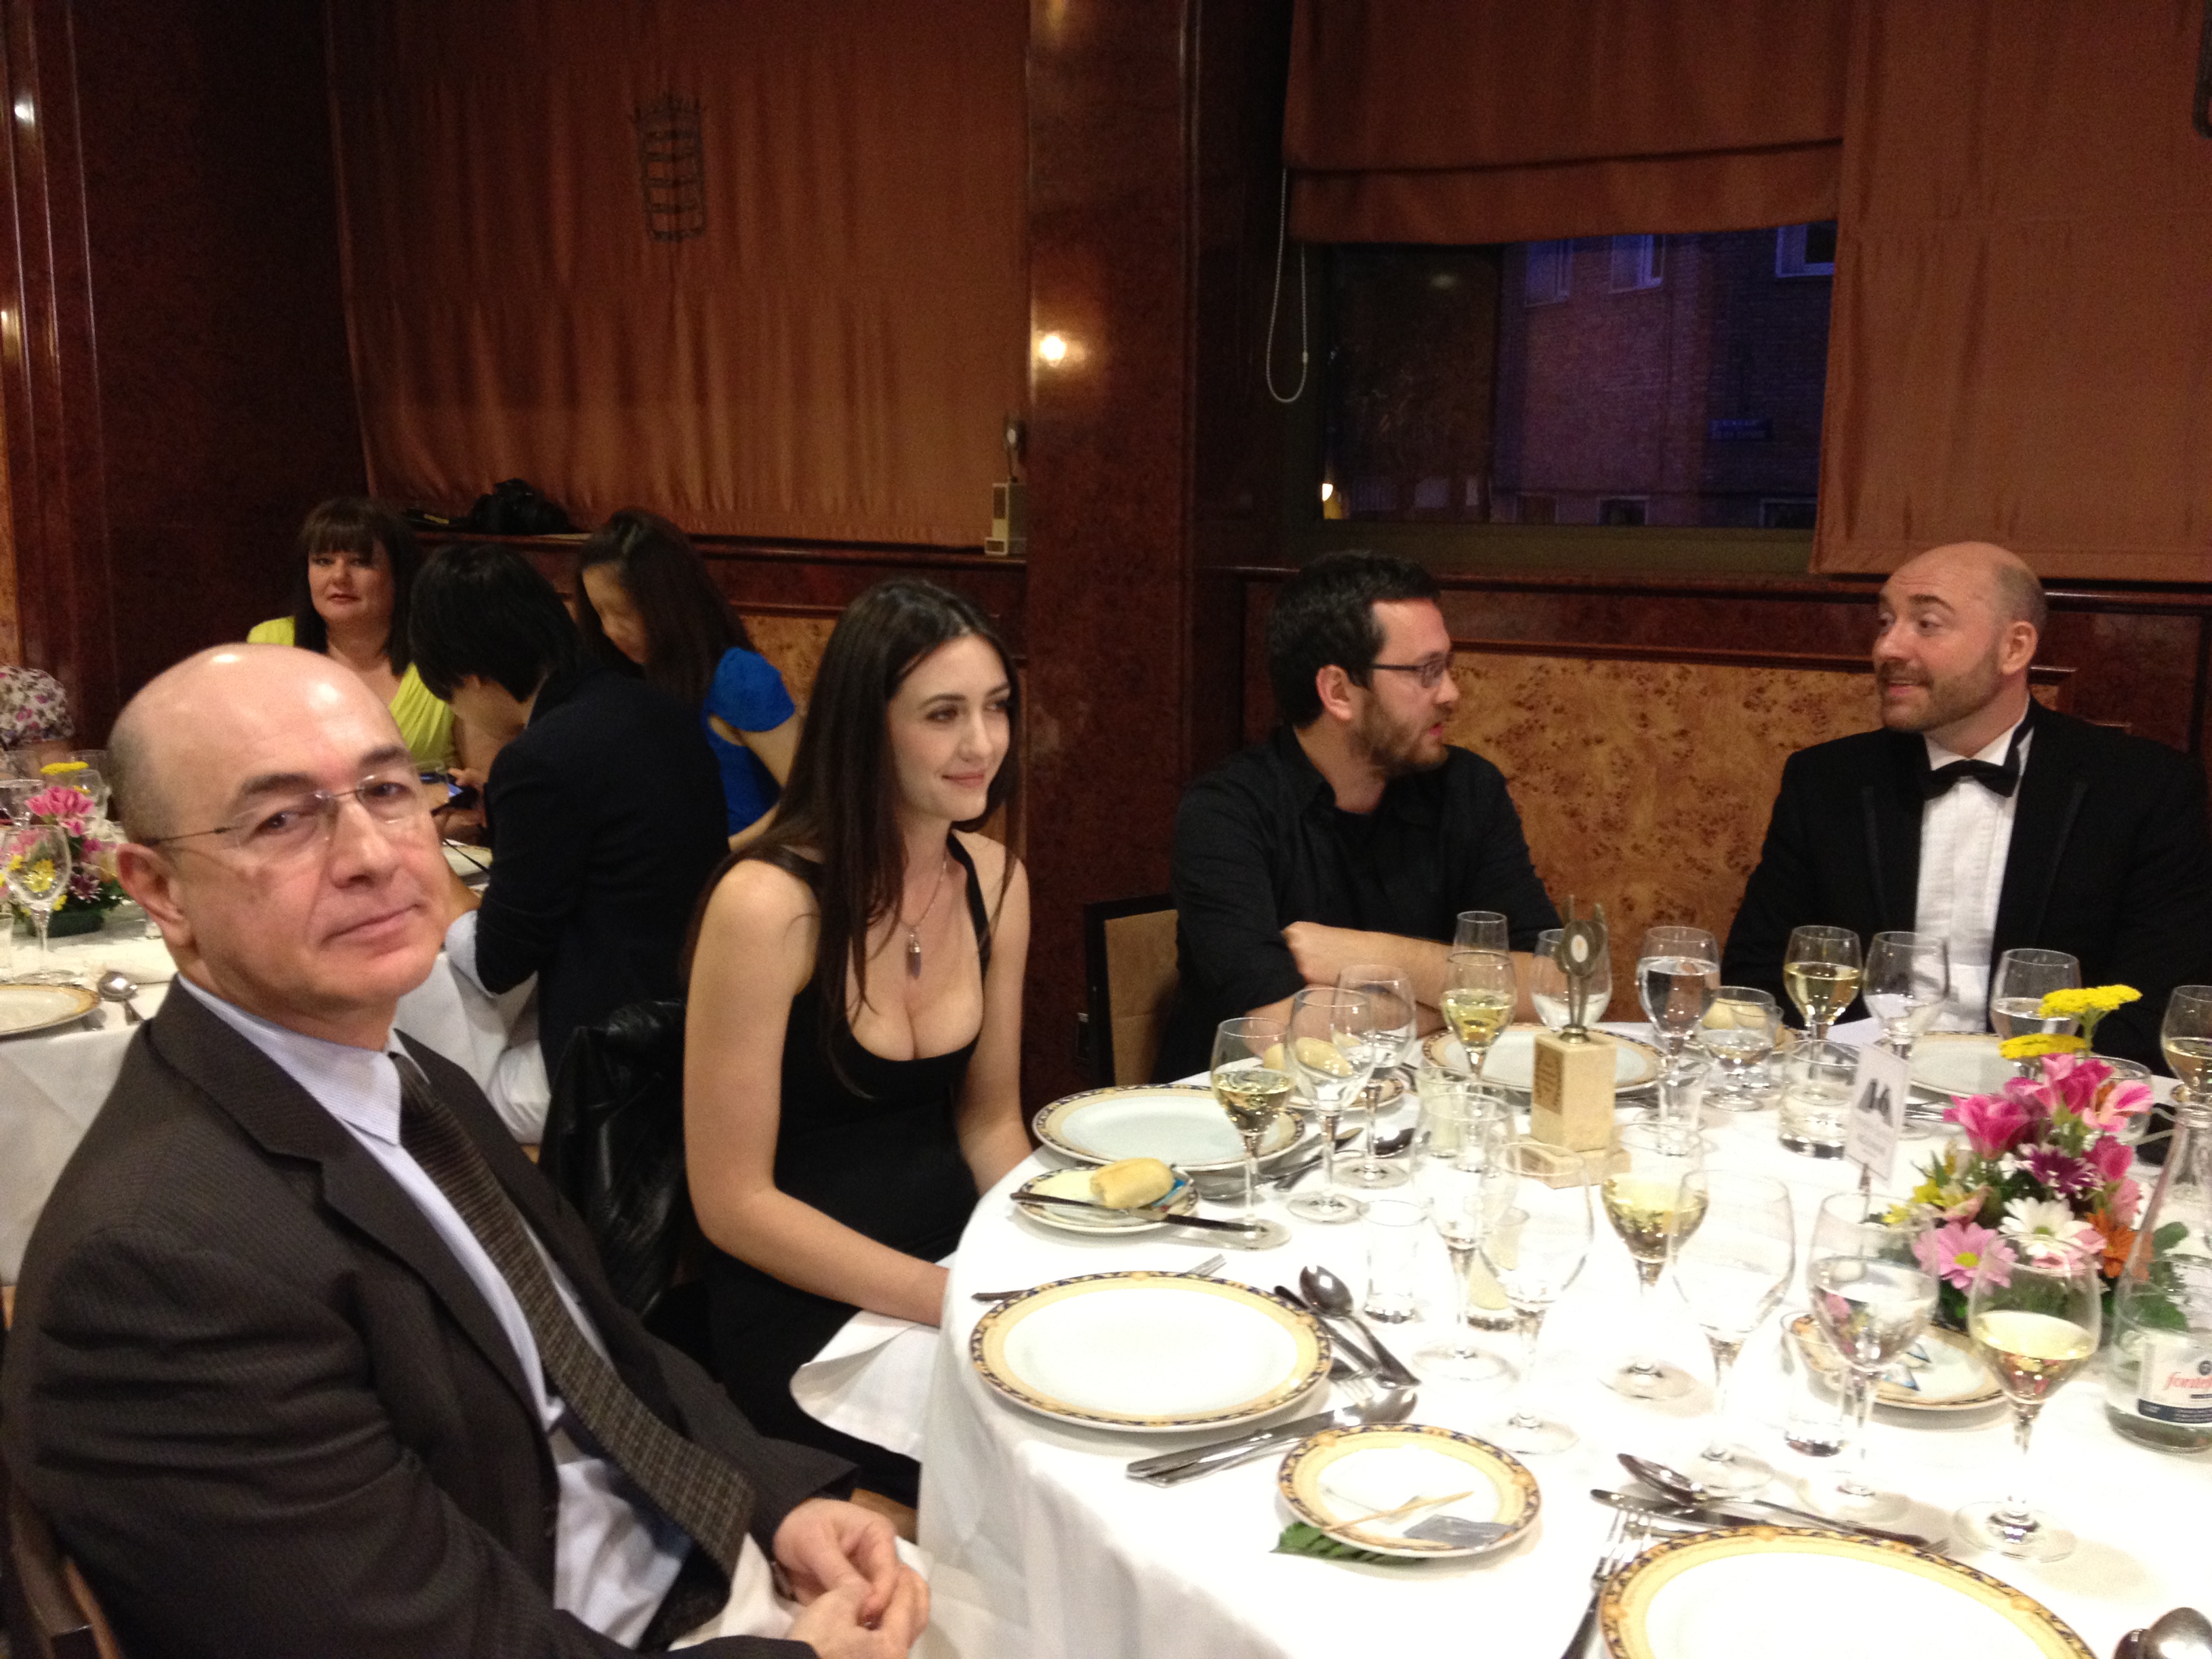 With Madeline Zima, Adam Sherman, Michael Brazil at Madrid International Film Festival 2012.